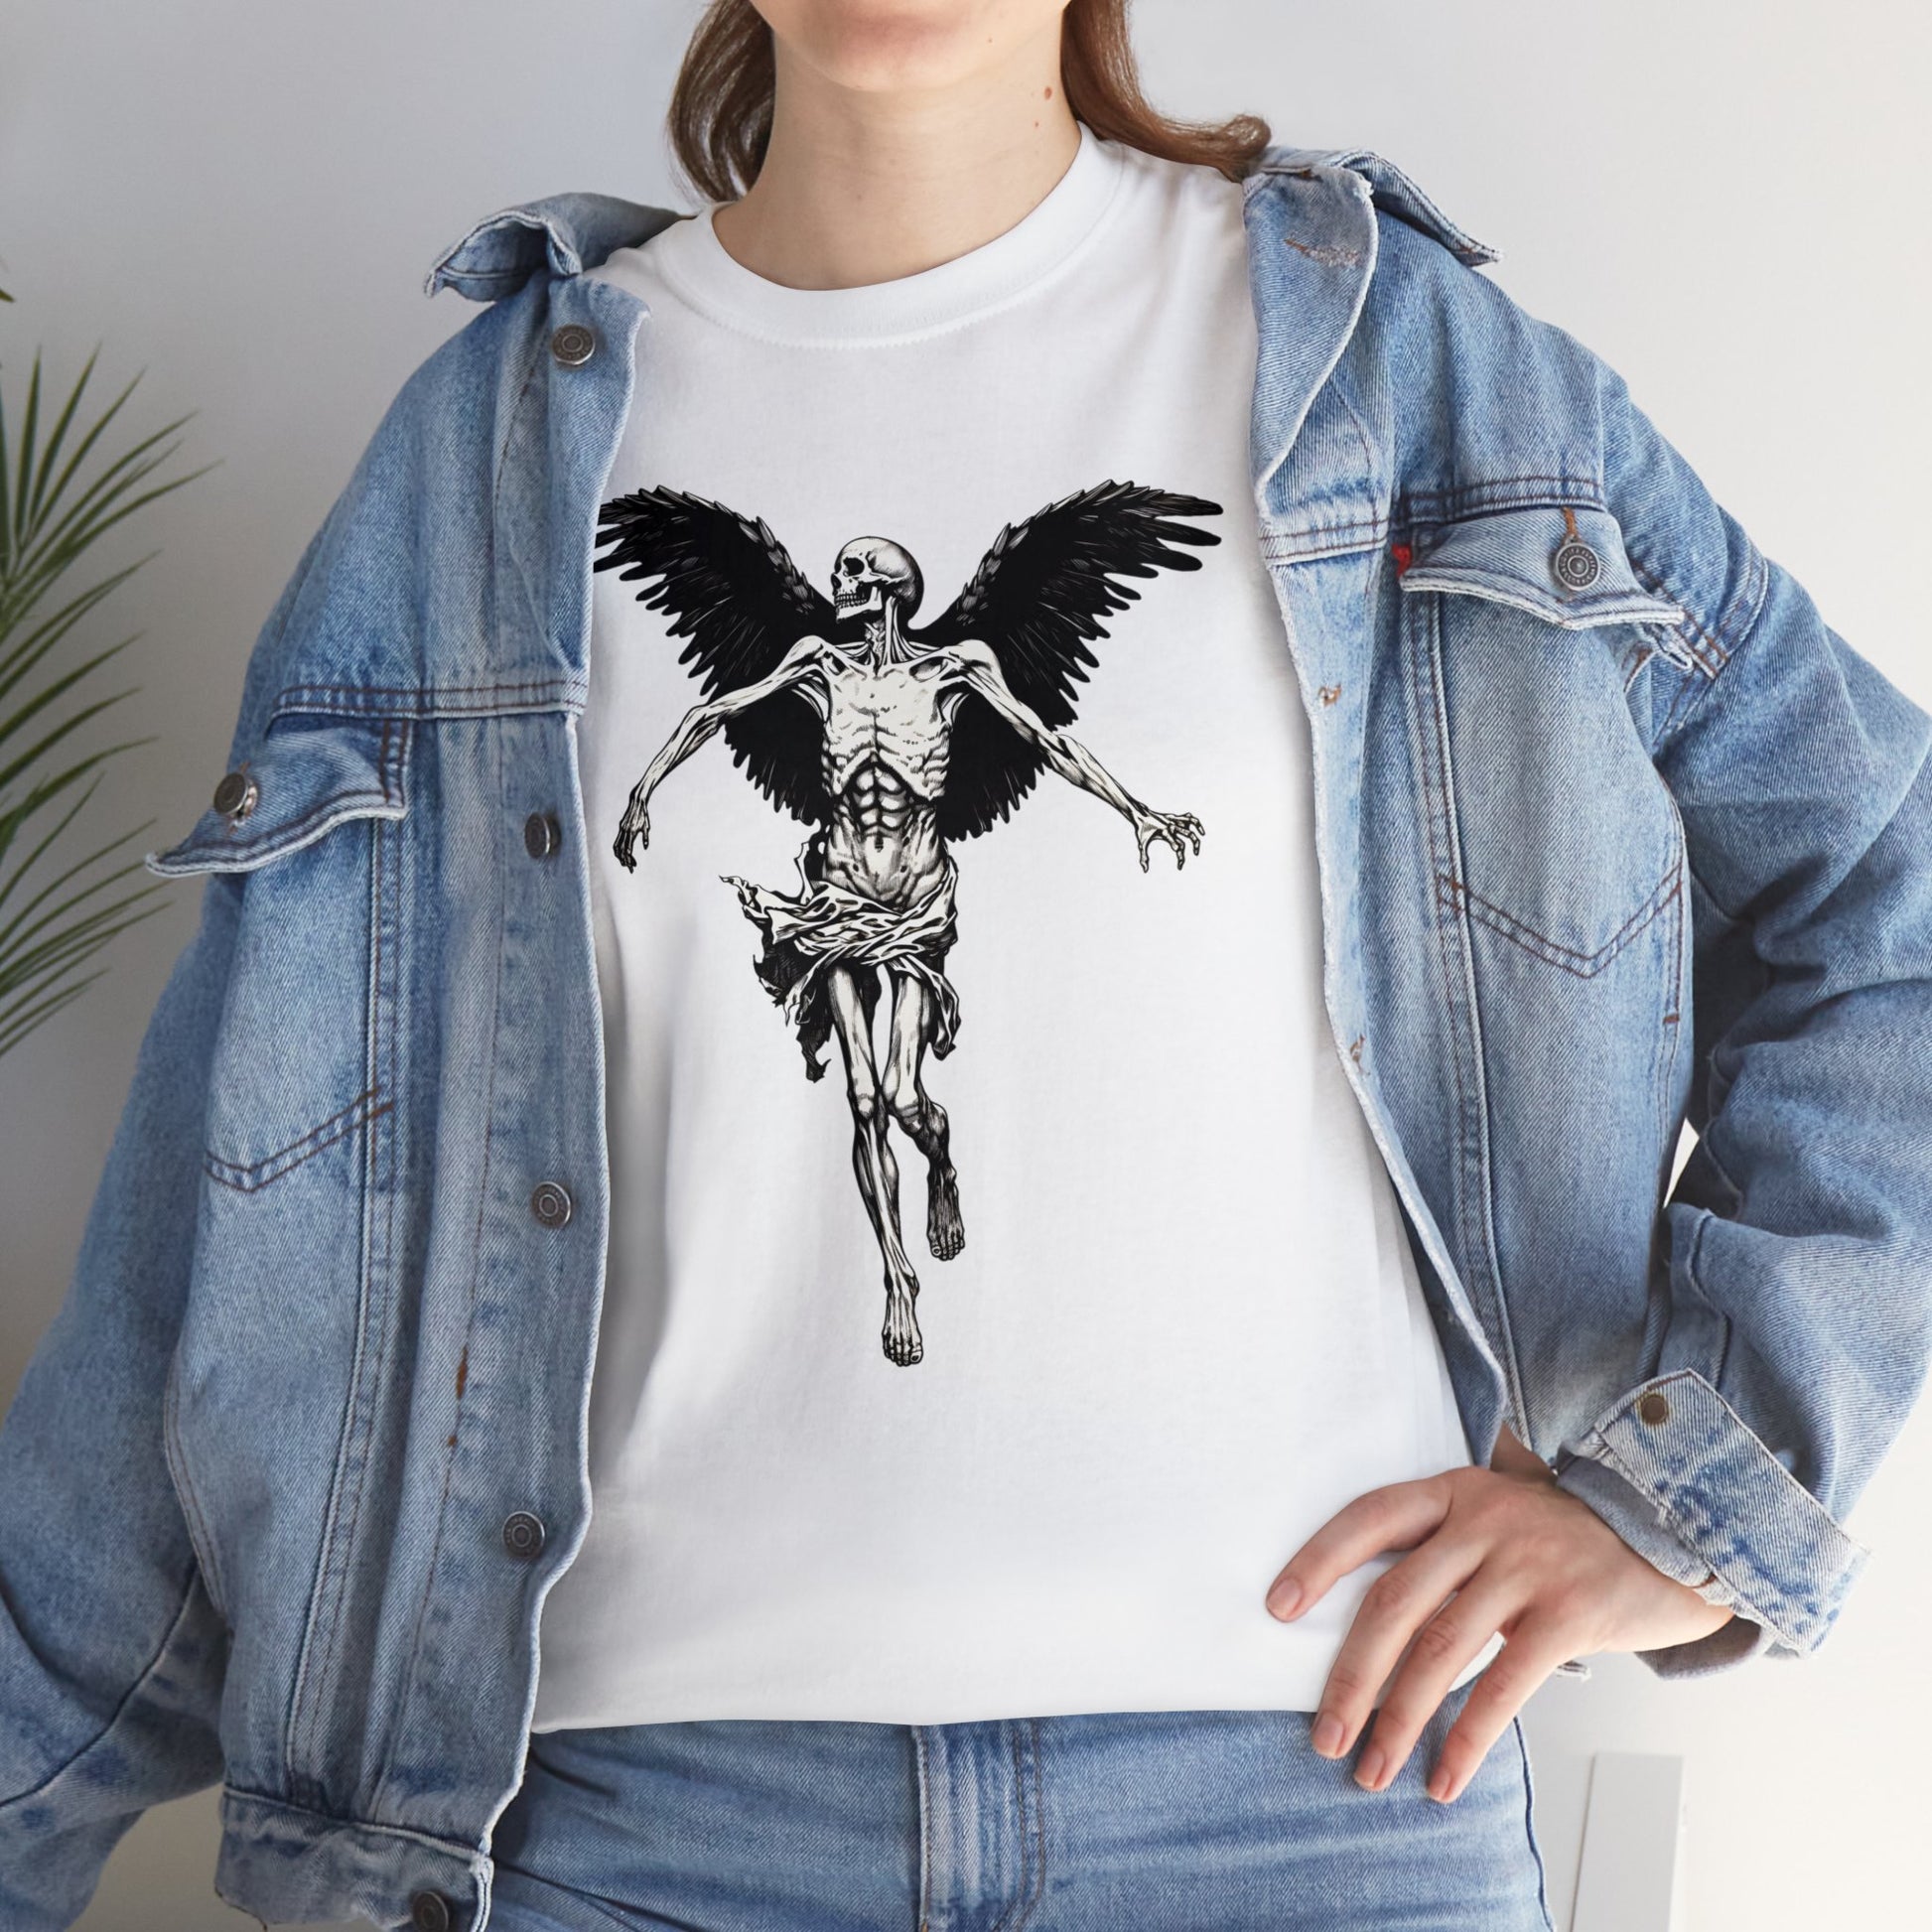 Unisex T-shirt Angel of Death - Frogos Design